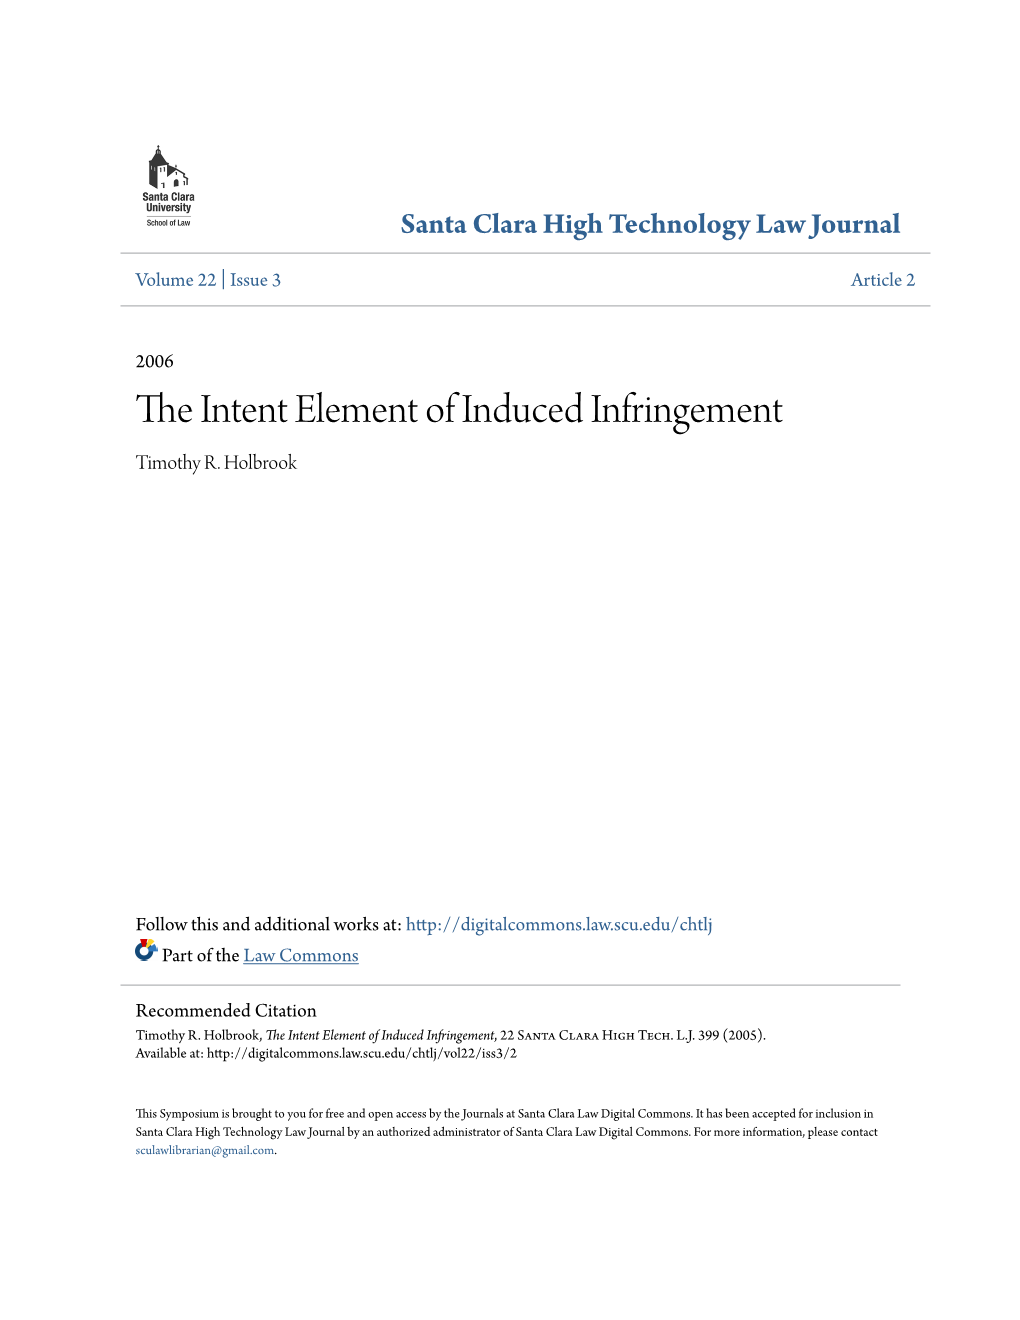 The Intent Element of Induced Infringement, 22 Santa Clara High Tech